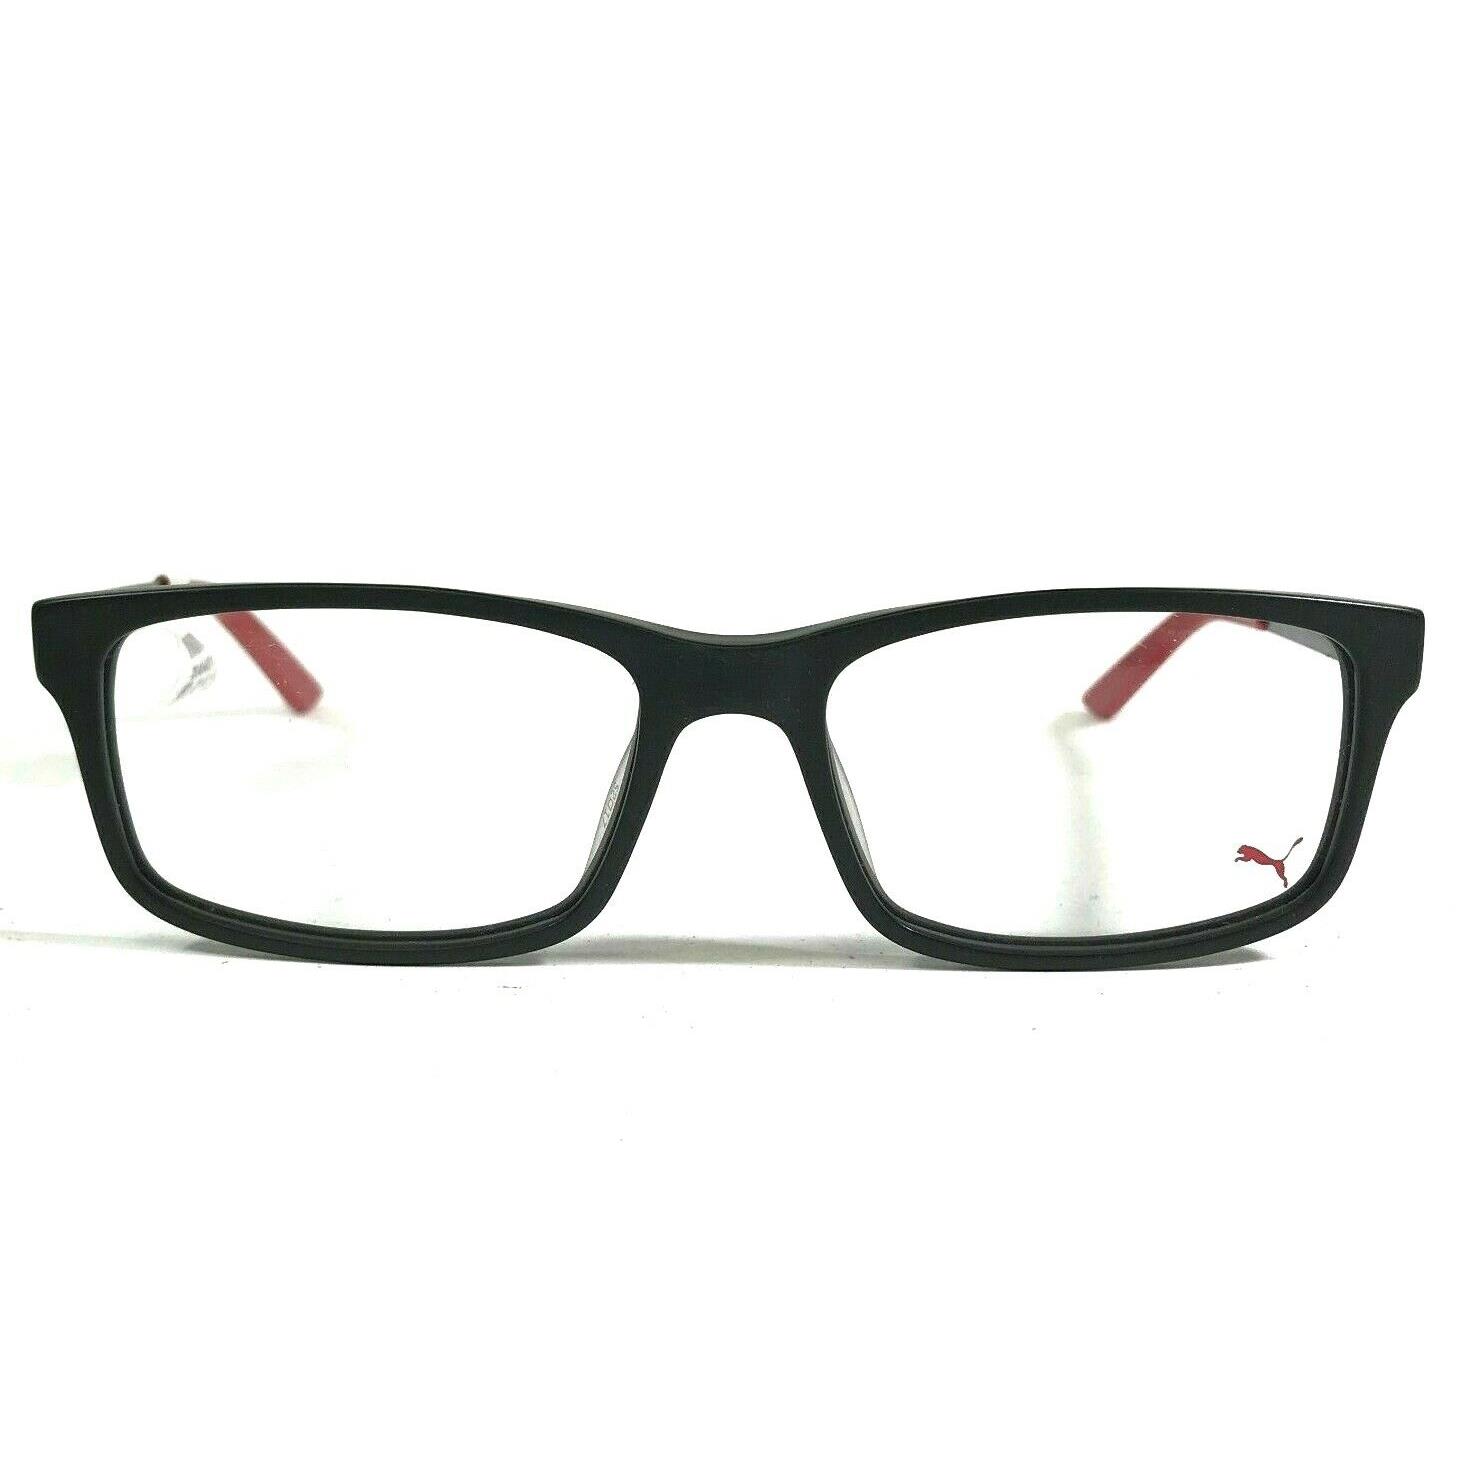 Puma PE00160 001 Eyeglasses Frames Black Red Square Full Rim 52-17-140